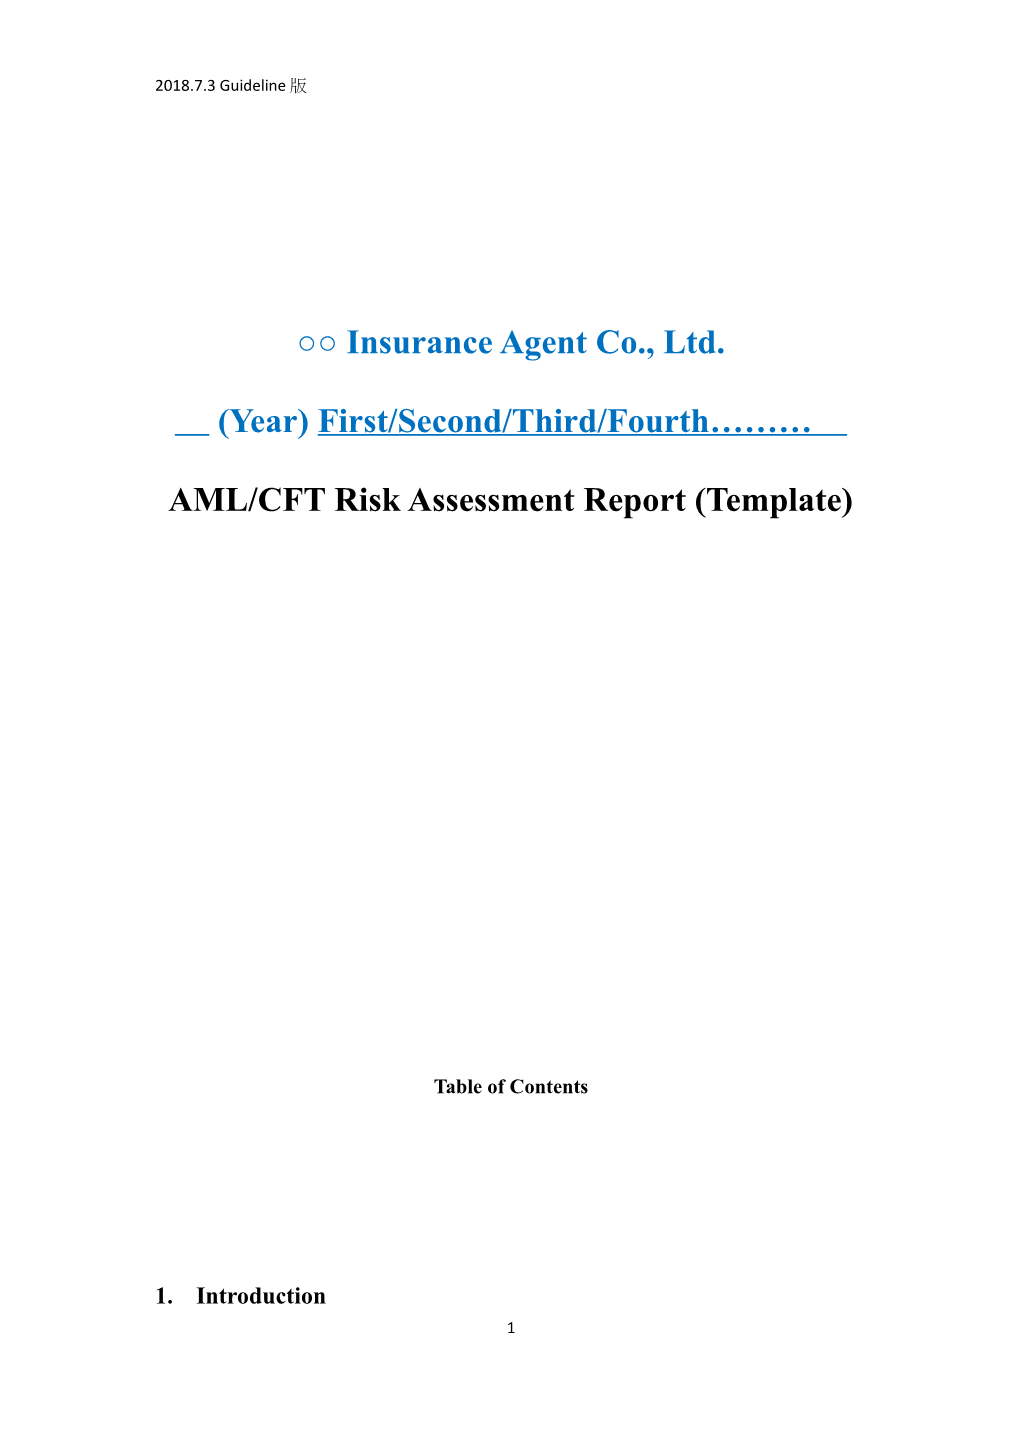 AML/CFT Risk Assessment Report (Template)